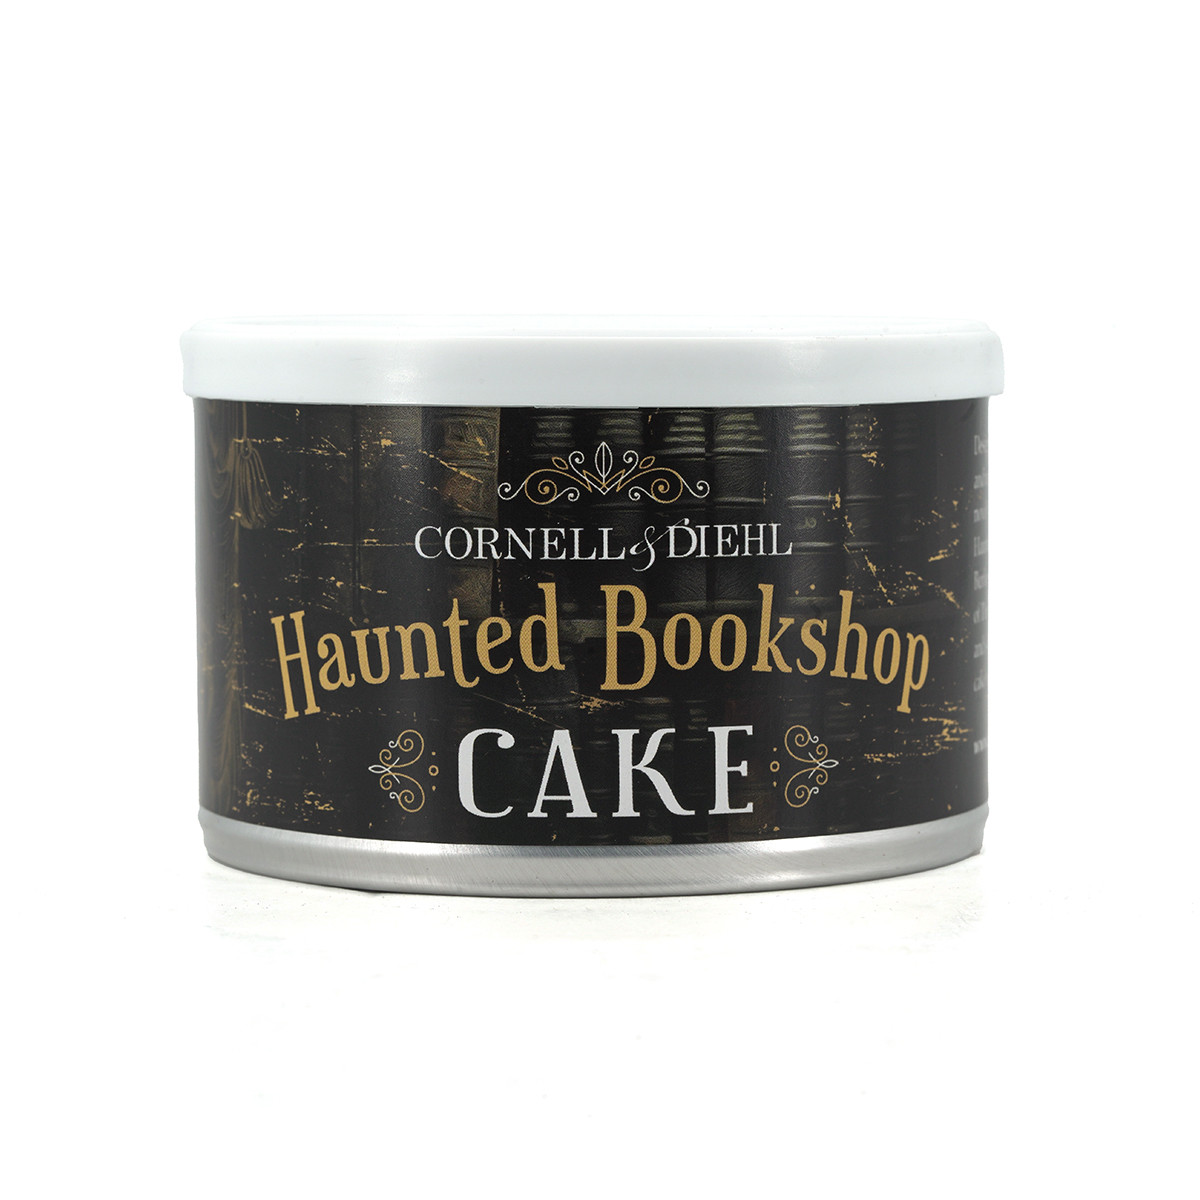 Cornell & Diehl Haunted Bookshop Cake 康奈爾與迪爾幽靈書店蛋糕